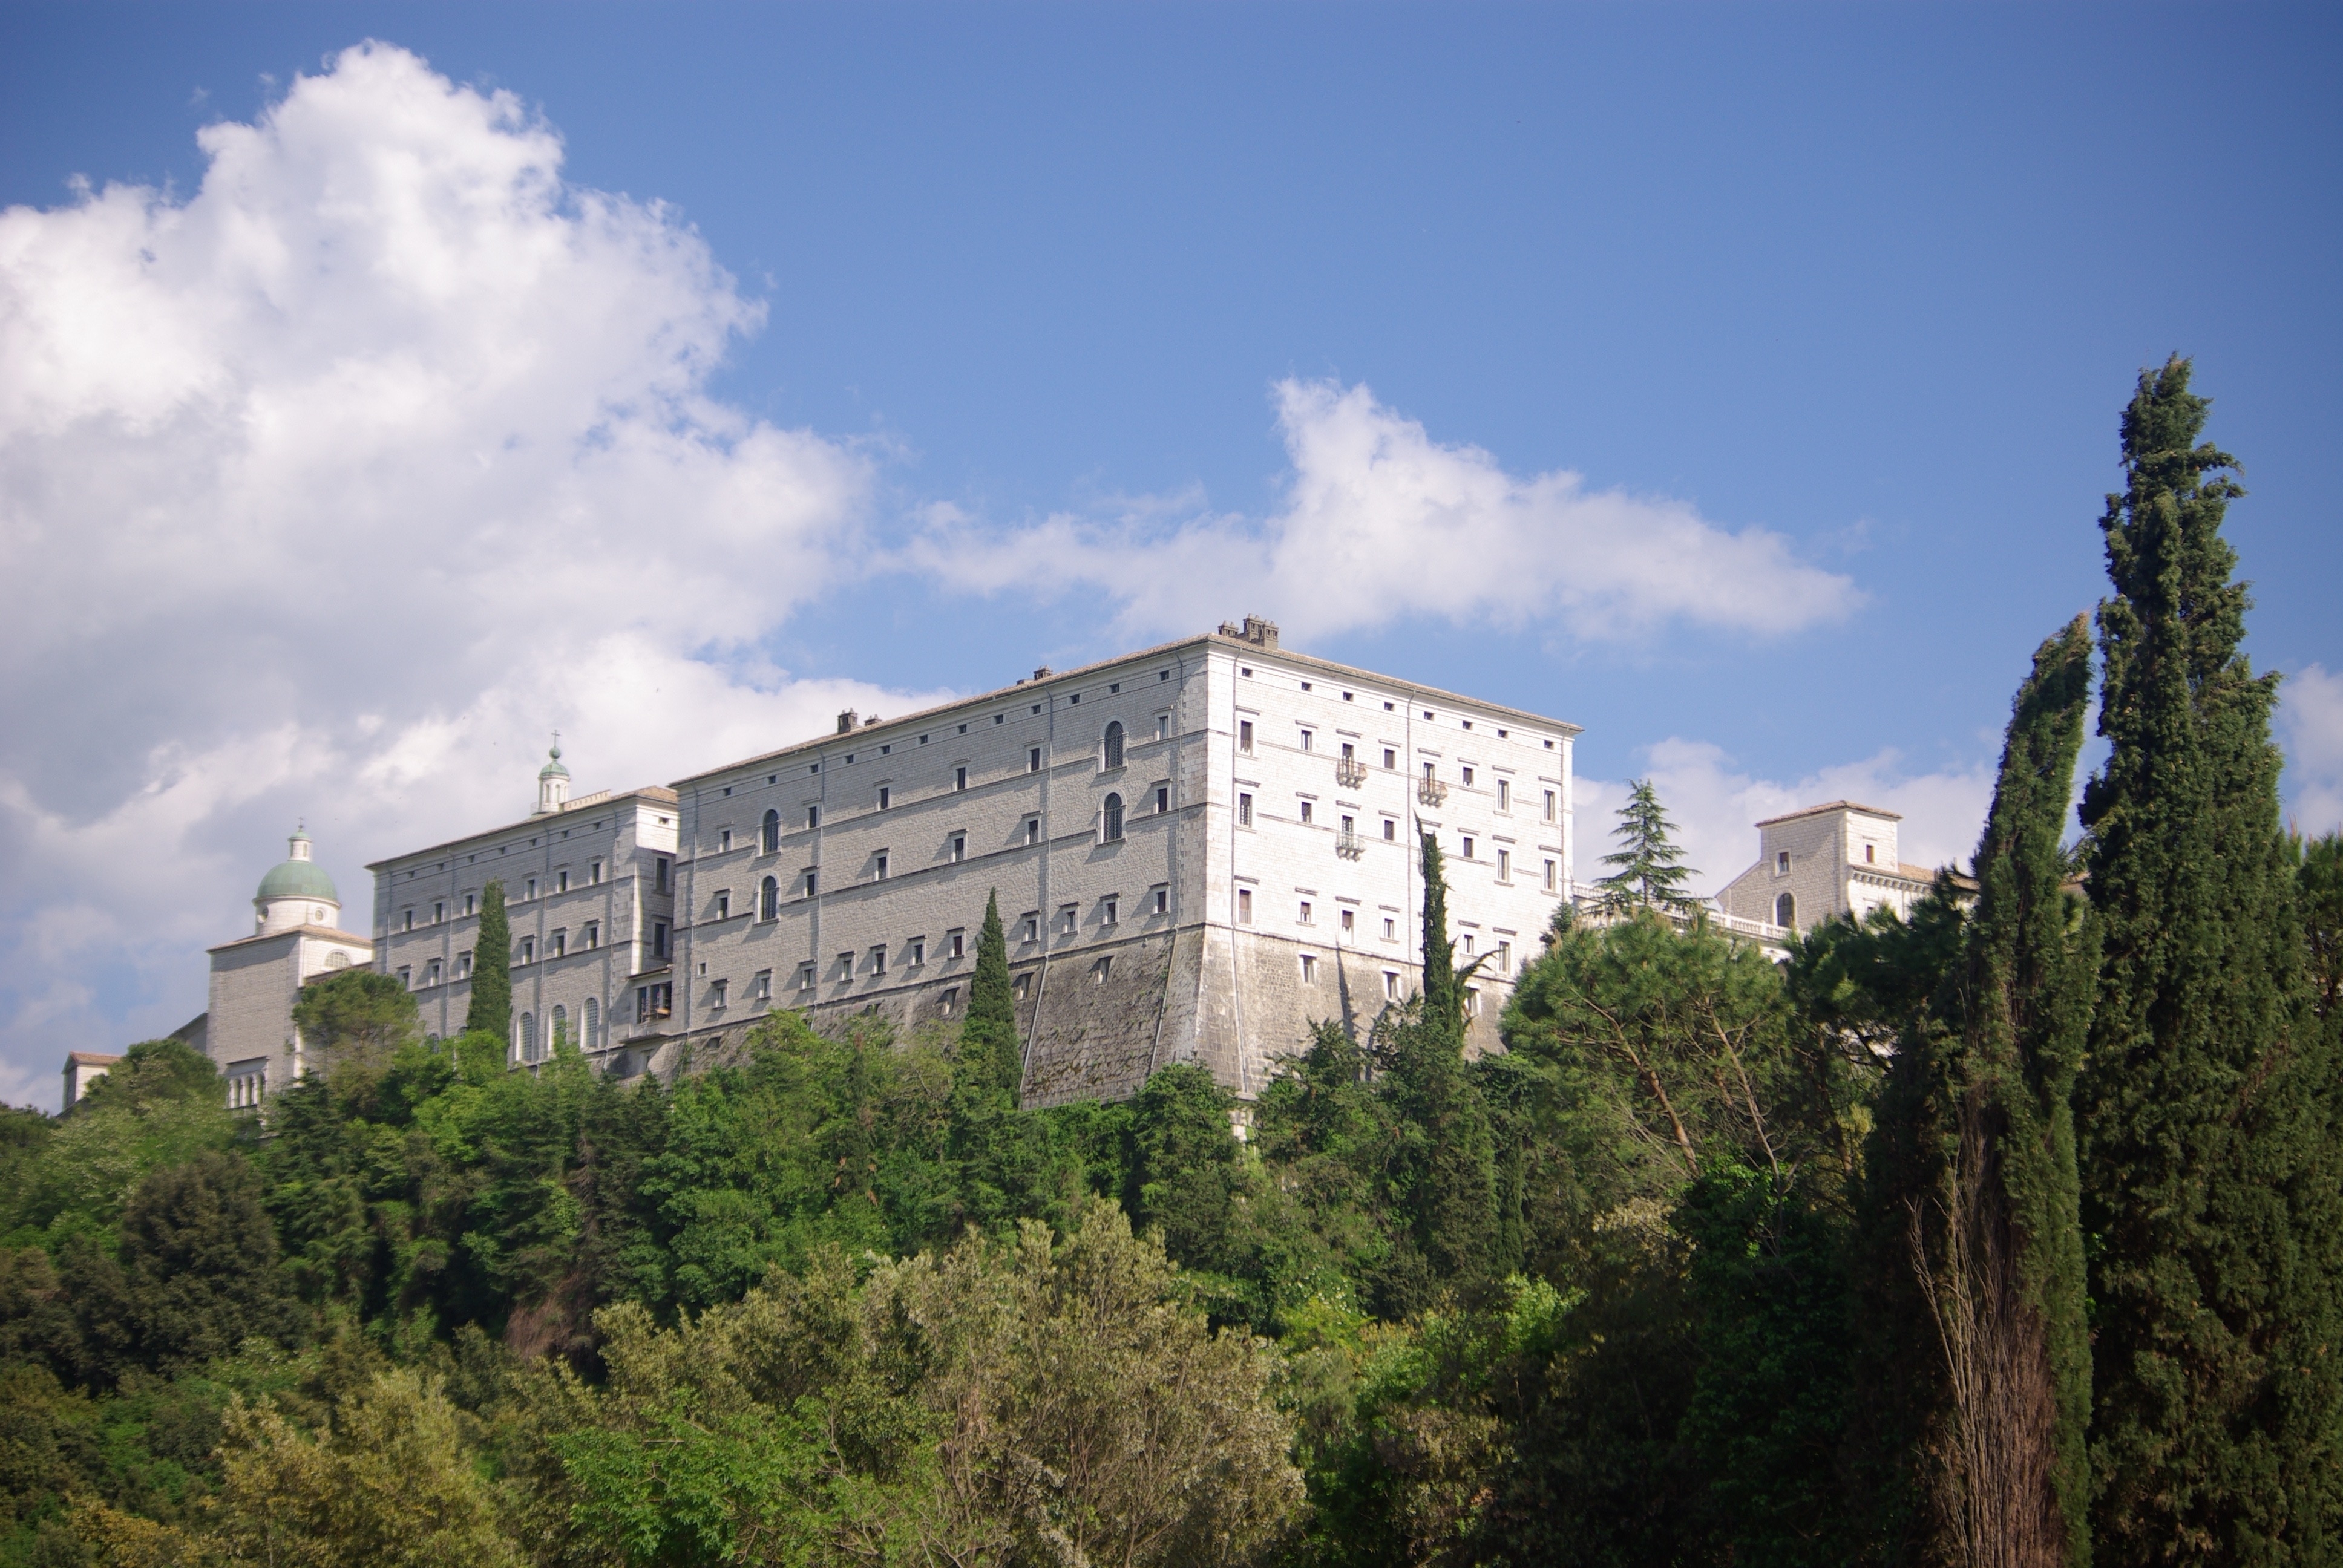 The Abbey of Monte Cassino